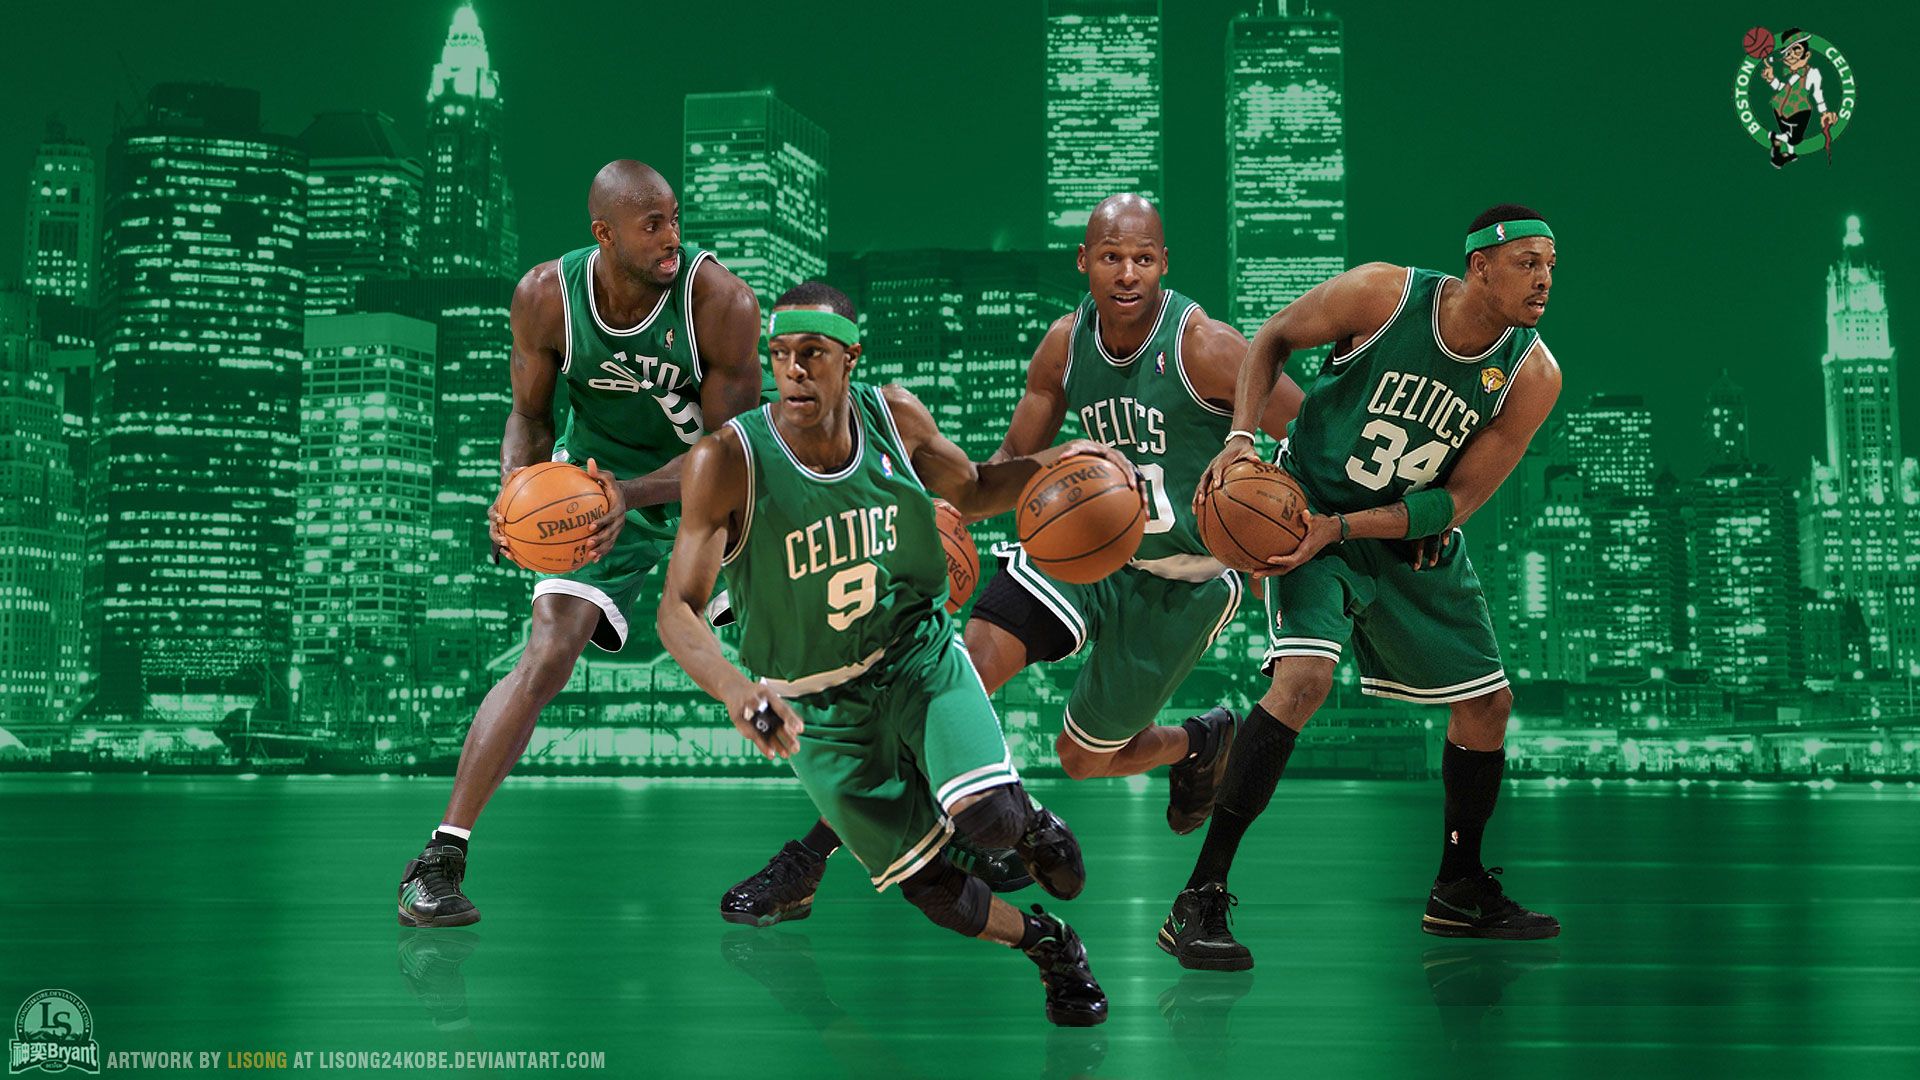 41+] Boston Celtics Wallpaper Logo - WallpaperSafari